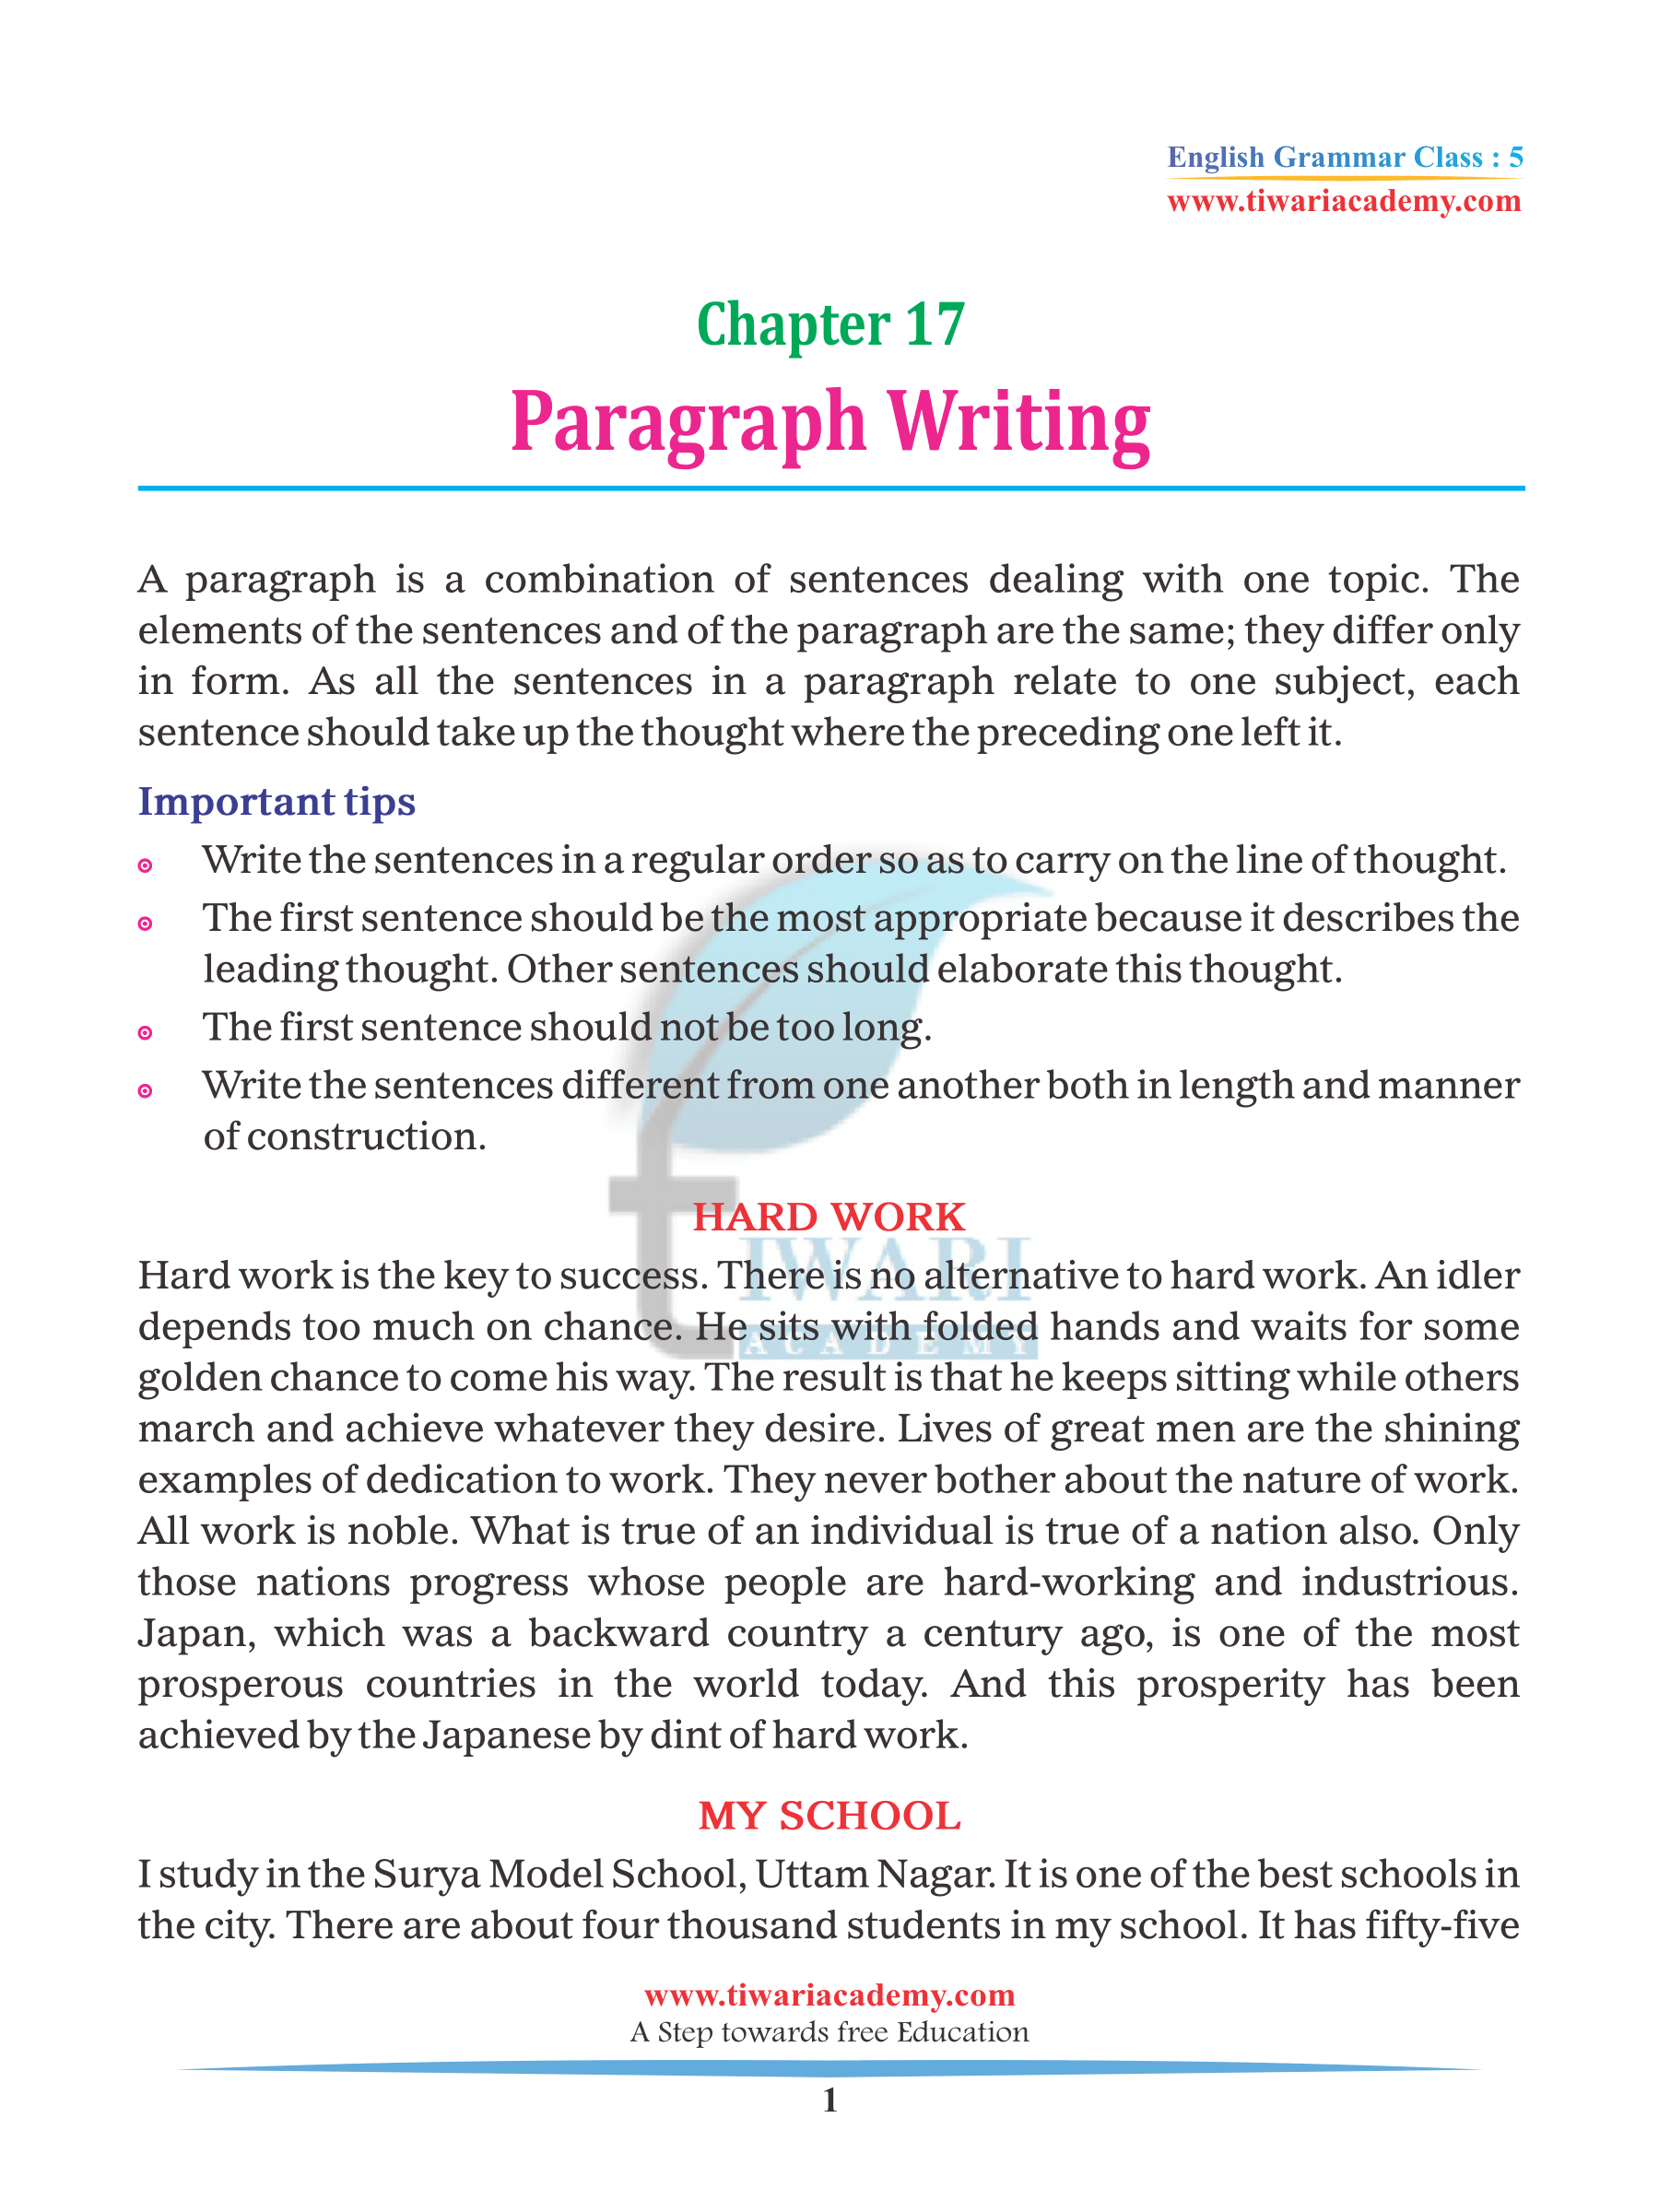 class-5-english-grammar-chapter-17-paragraph-writing-pdf-2022-2023